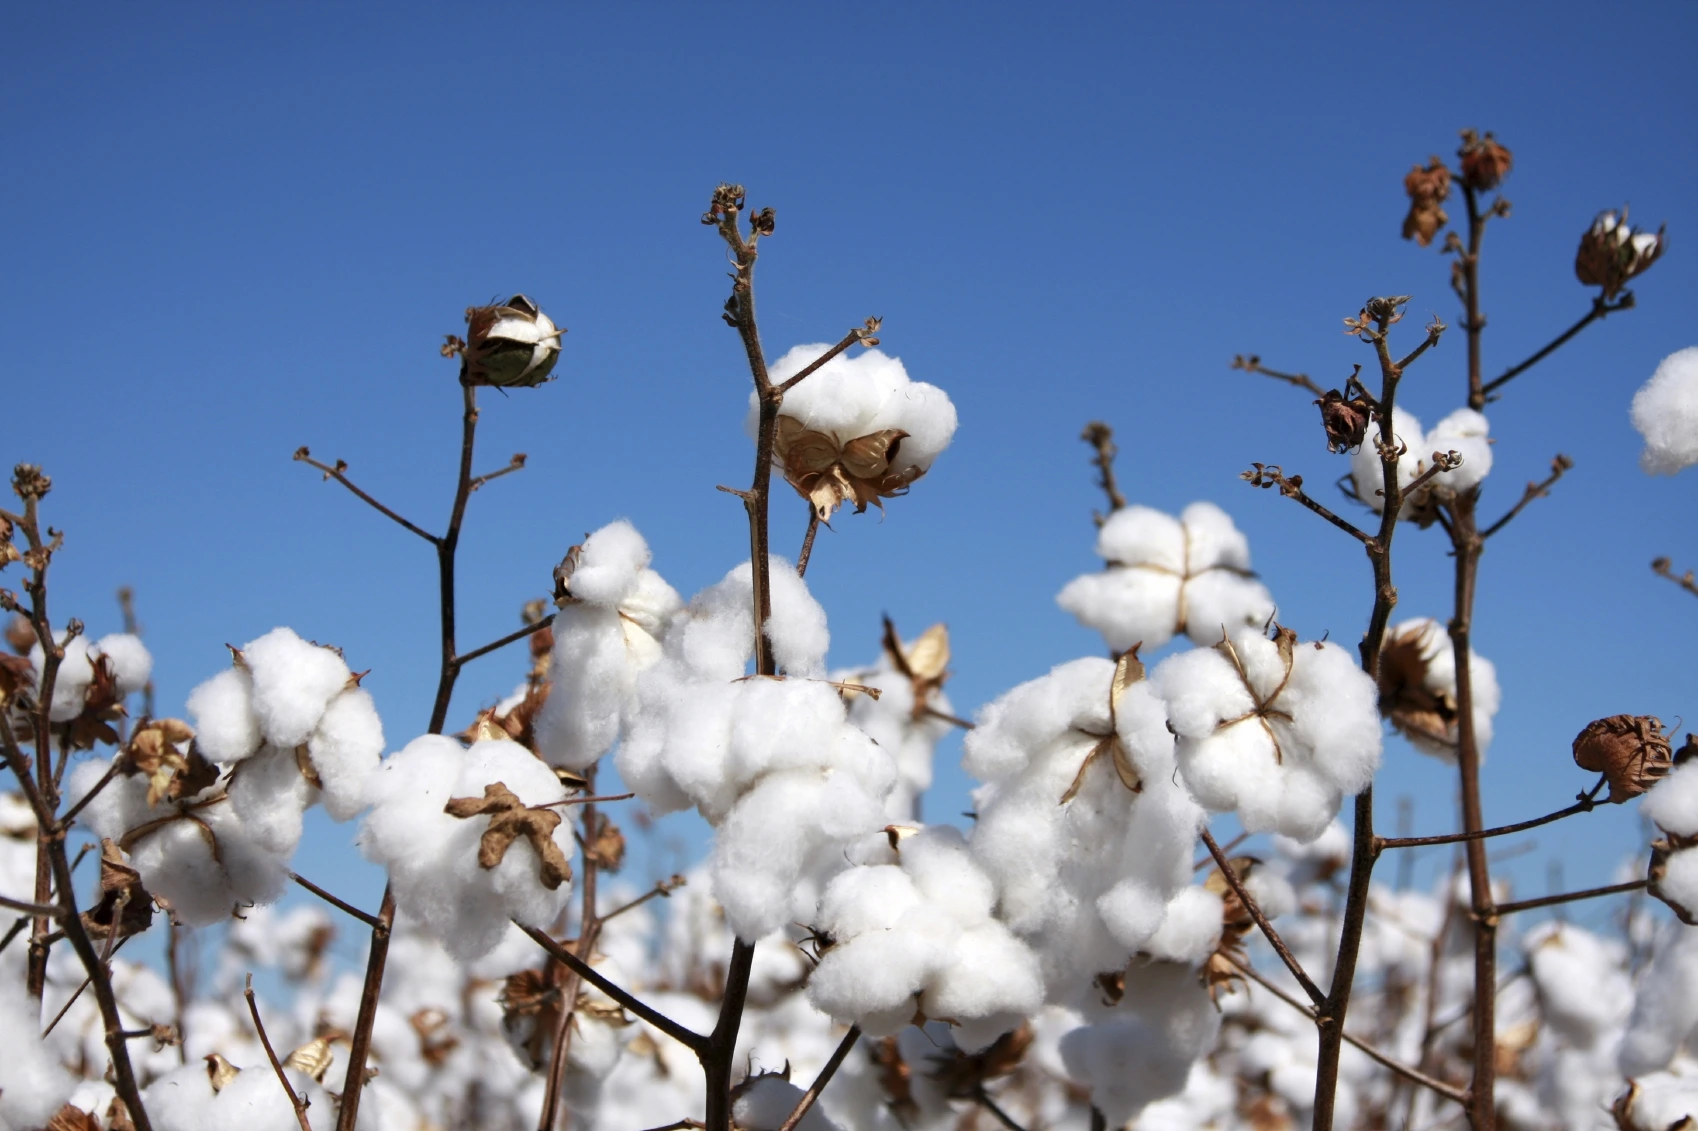 Organic cotton from Texaura